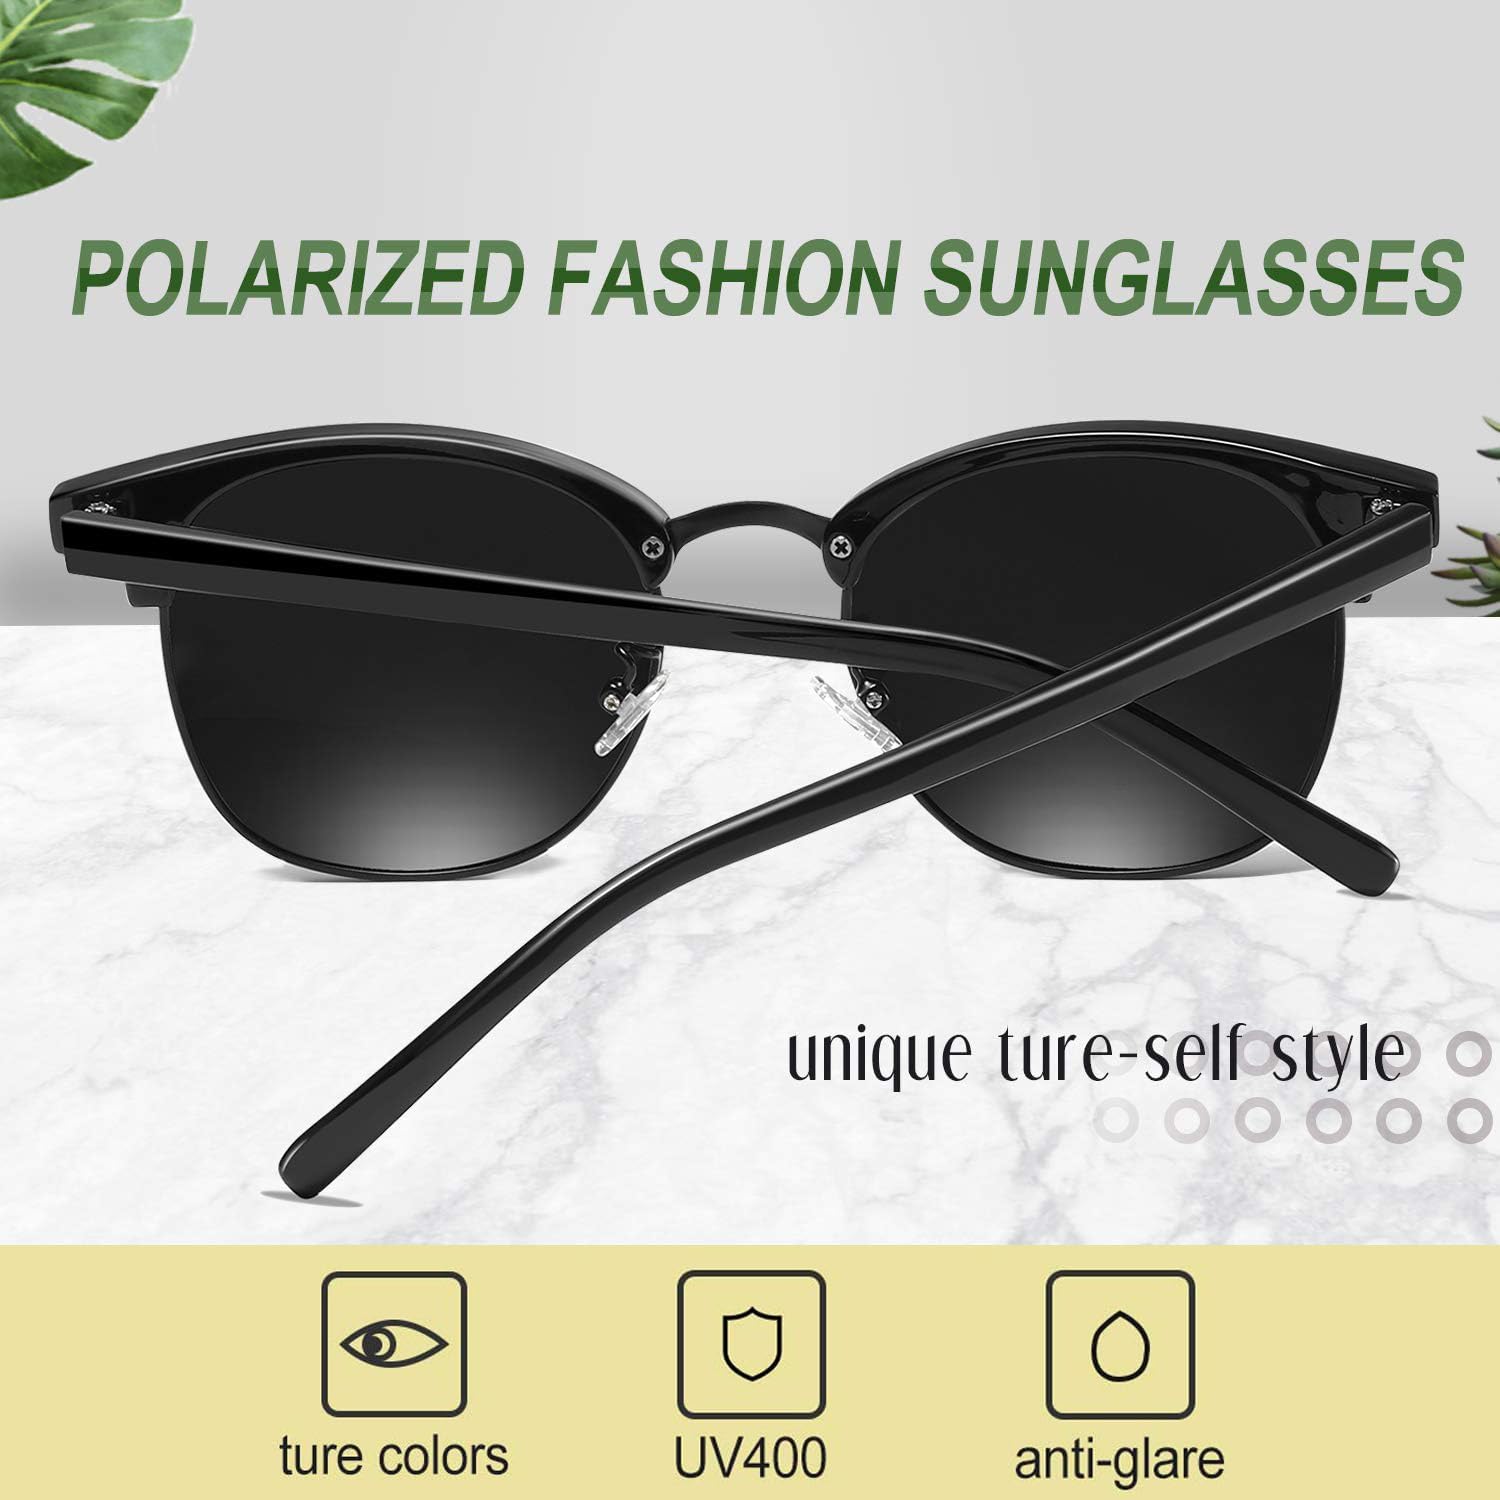 KANASTAL Polarized Sunglasses for Men Women, Lightweight TR90 Frame Square Sun Glasses UV400 Protection Shades Outdoor